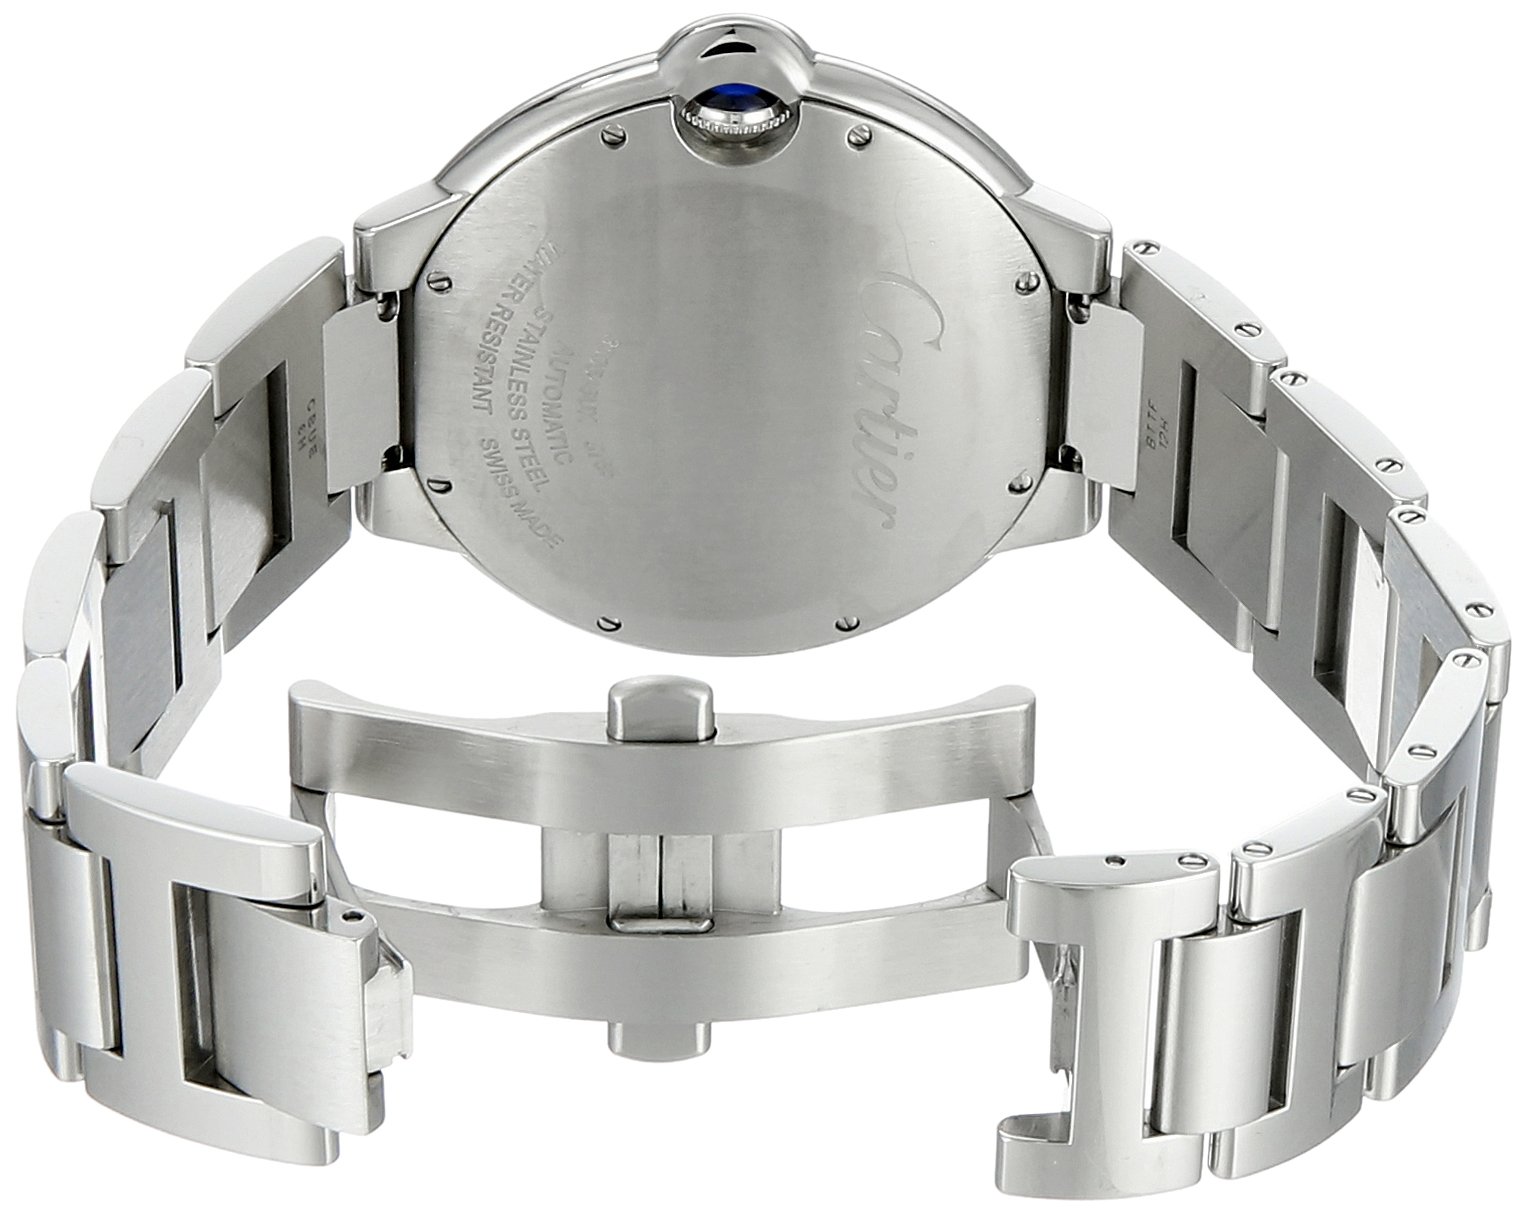 Cartier Men's W6920042 Ballon Bleu Analog Display Automatic Self Wind Silver Watch